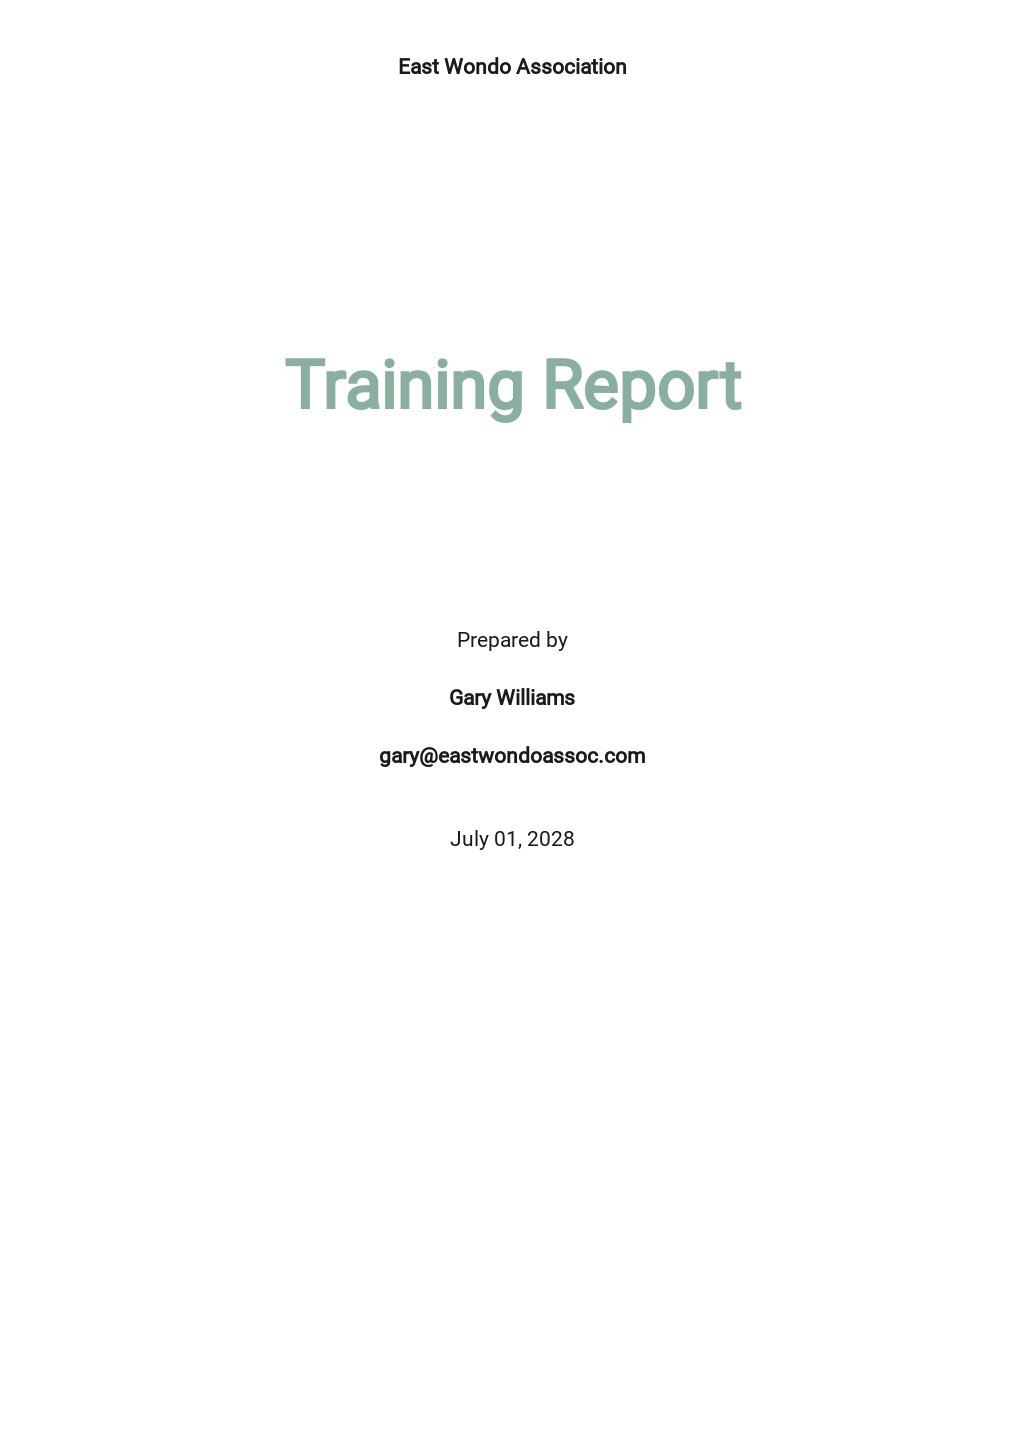 presentation on training report